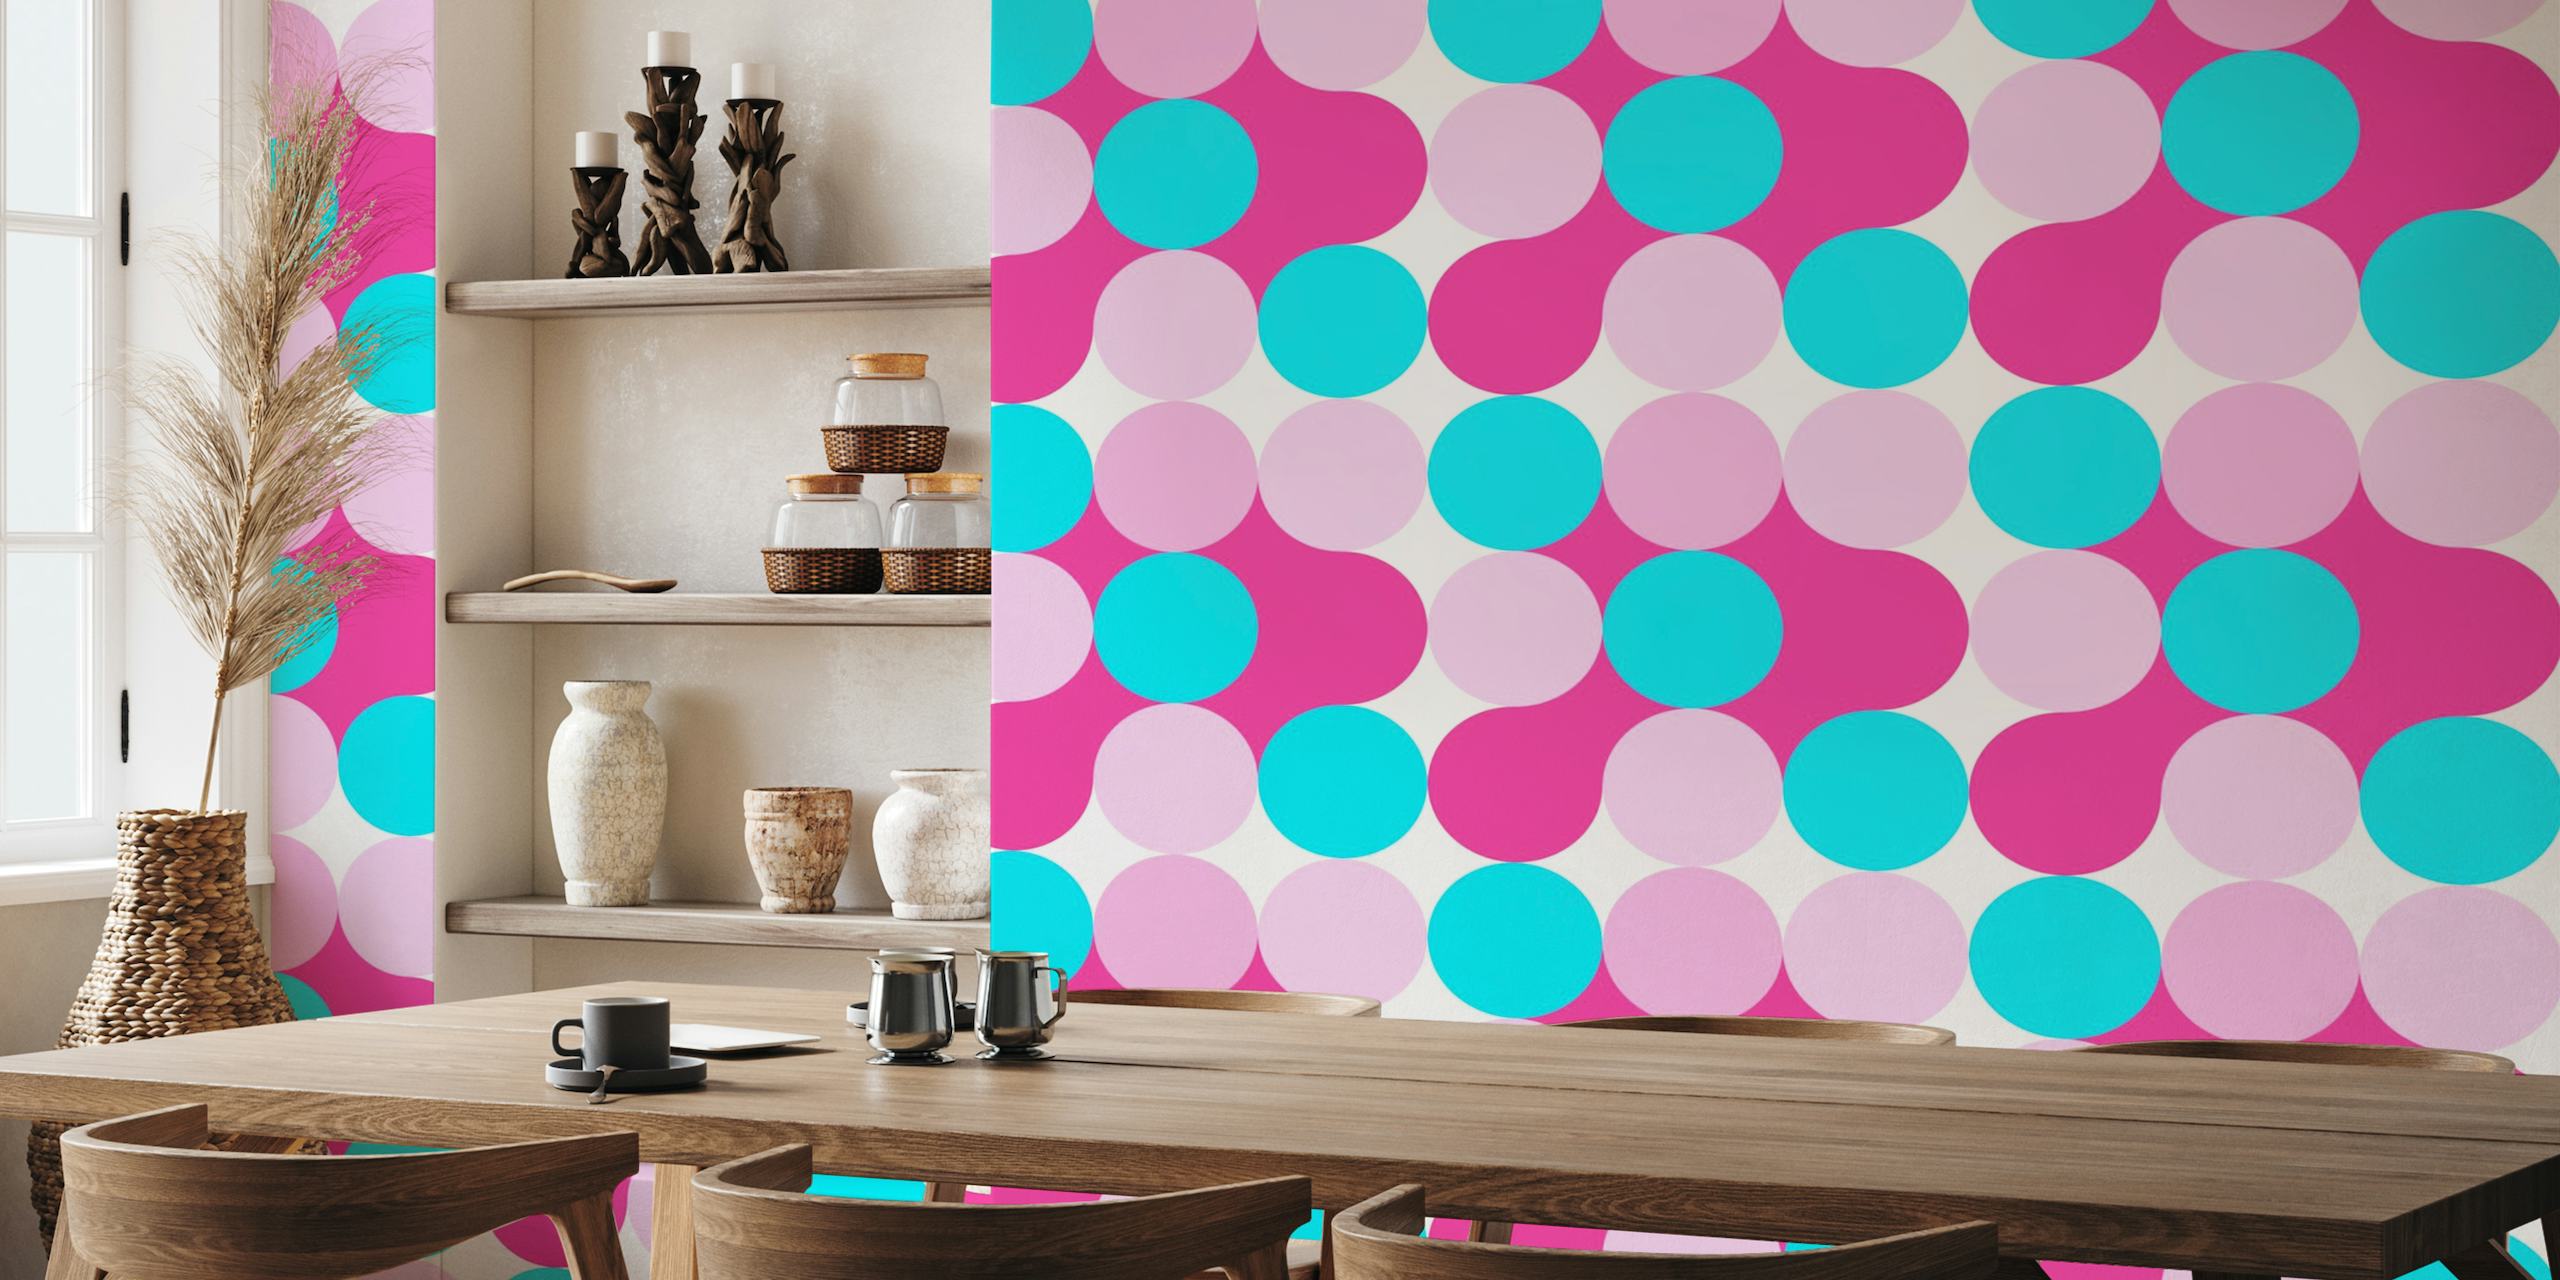 Retro Barbicore Pink and Aqua dot pattern behang